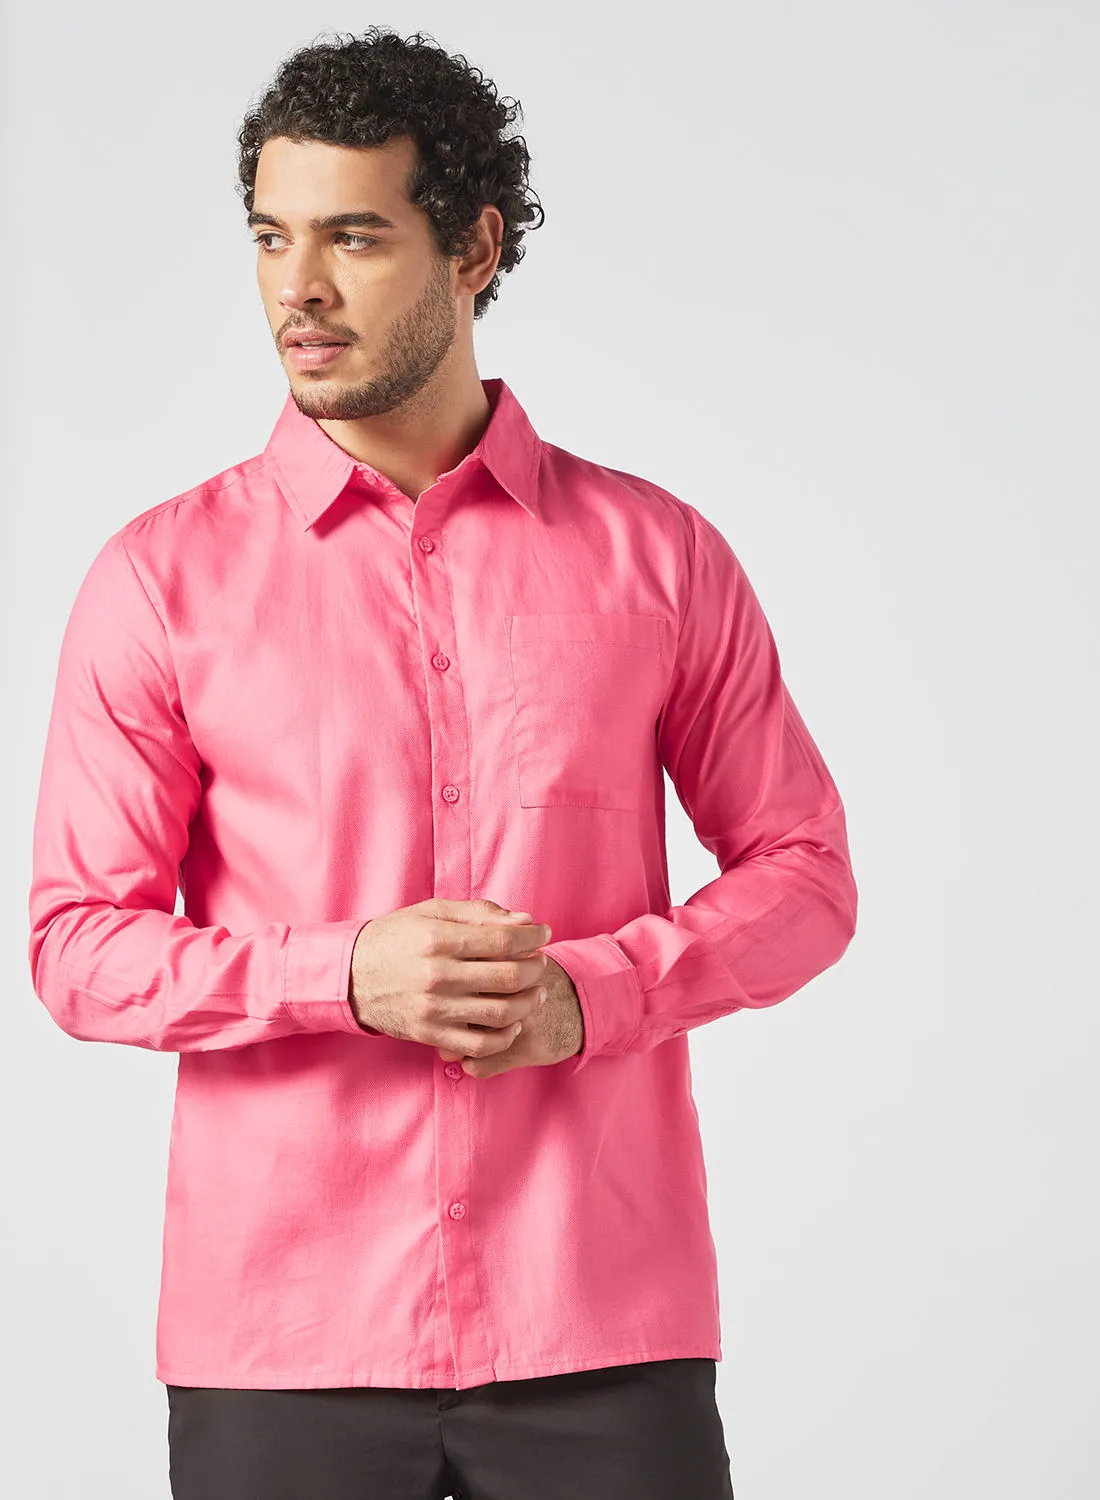 STATE 8 Basic Long Sleeve Shirt Pink